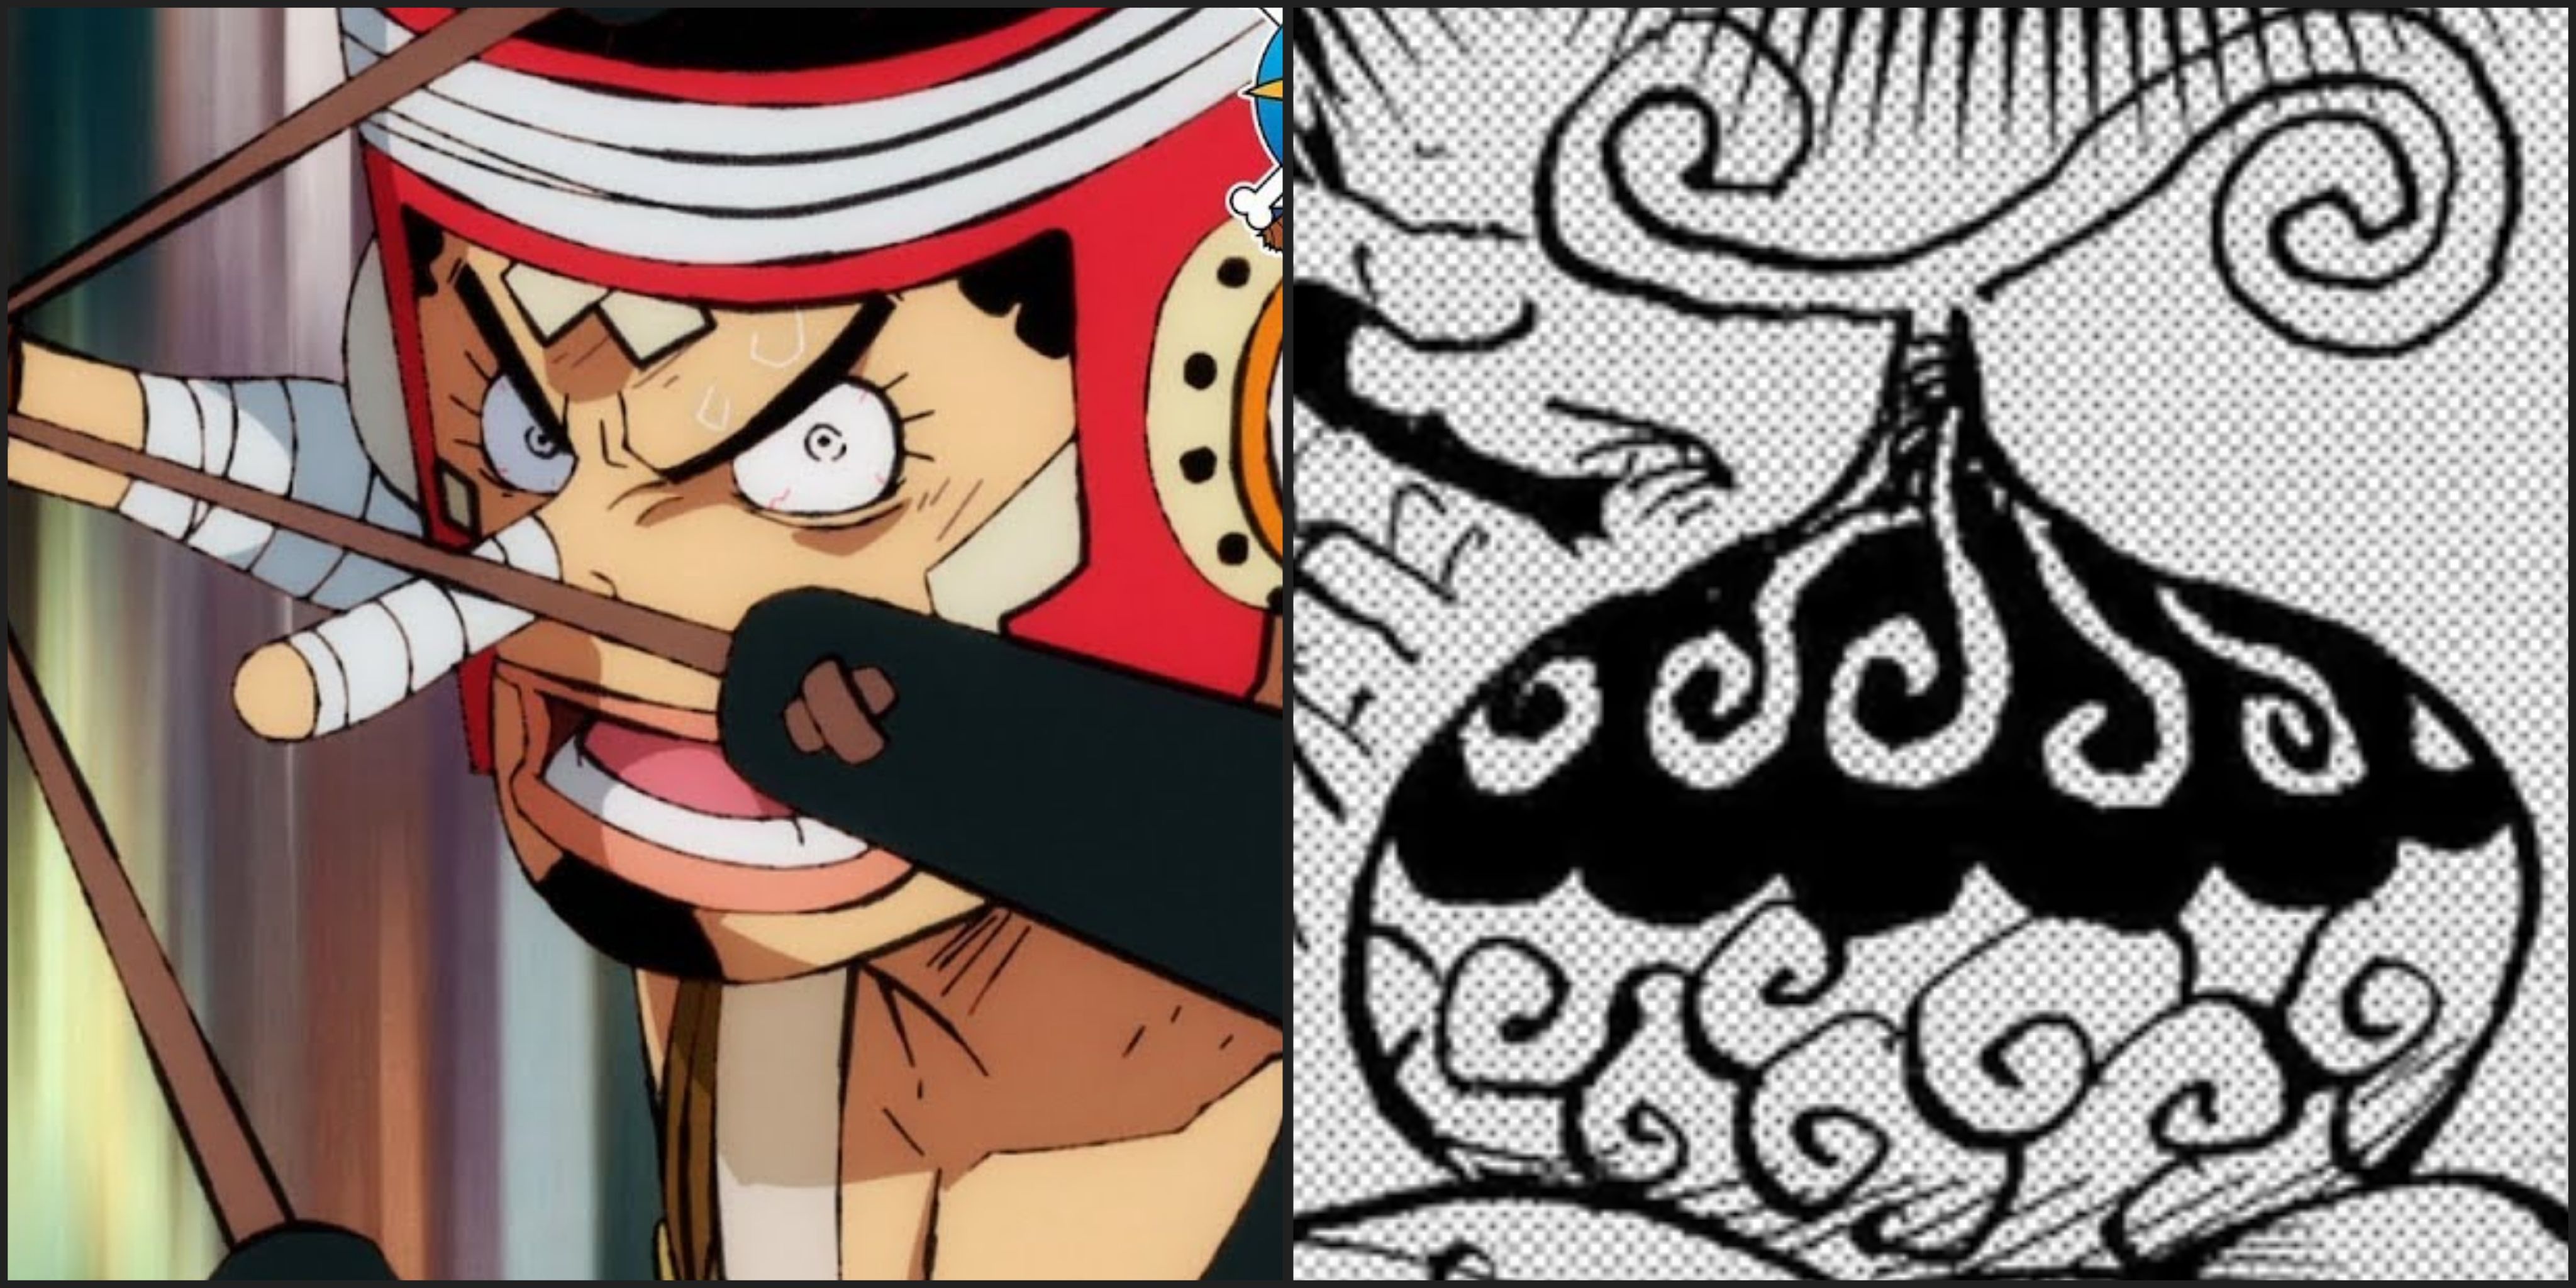 Suke Suke no Mi Devil Fruit in One Piece